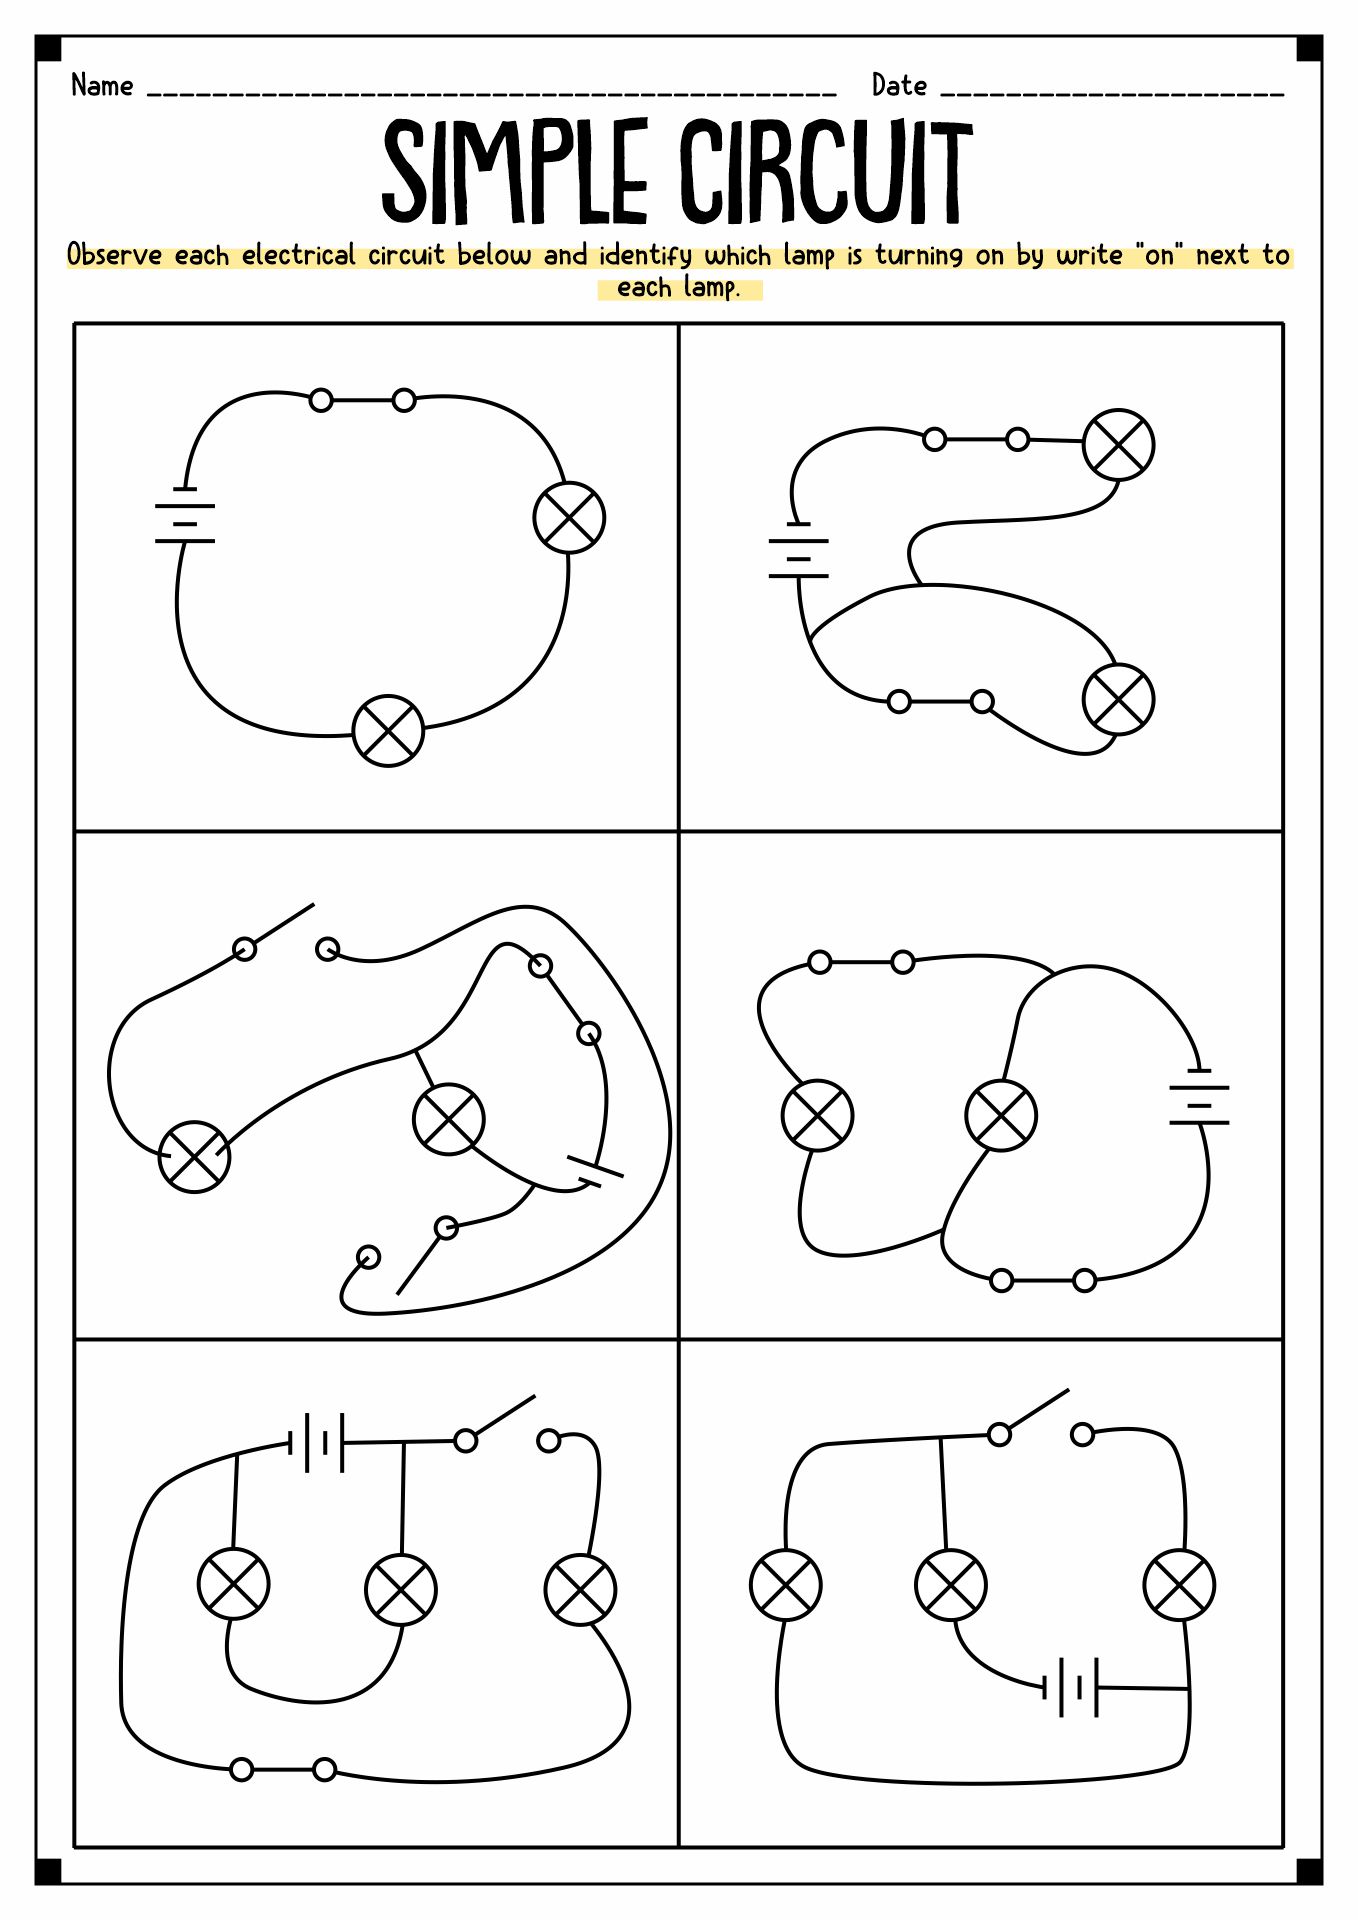 Simple Circuit 5th Grade Worksheet Image